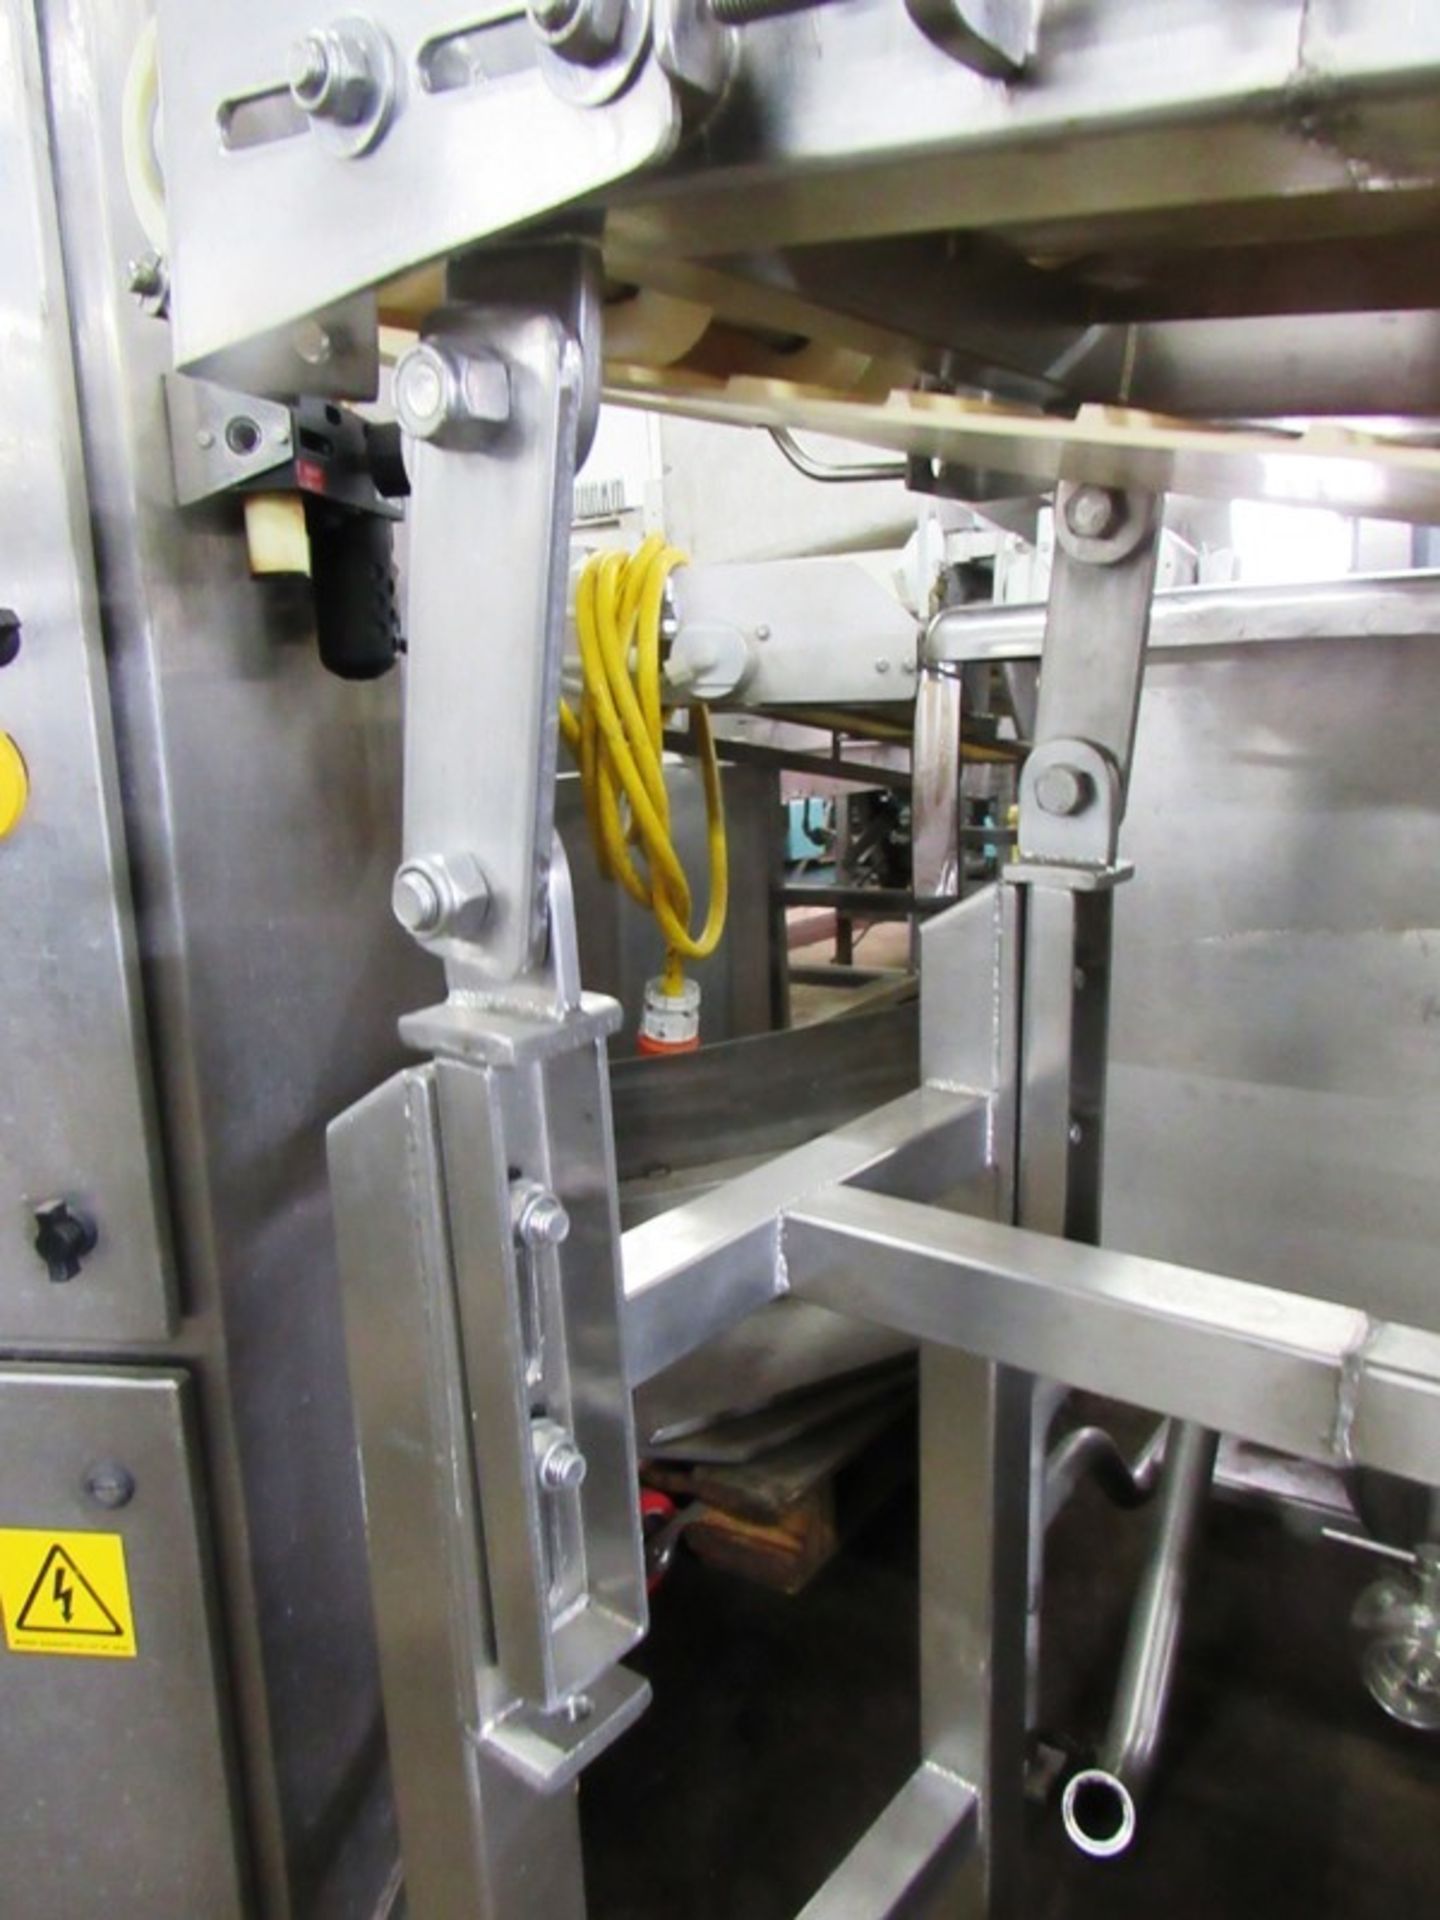 Stainless Steel Conveyor, 12" W X 6' L neoprene belt, adjustable incline to flat, 230/460 volt - Image 3 of 3